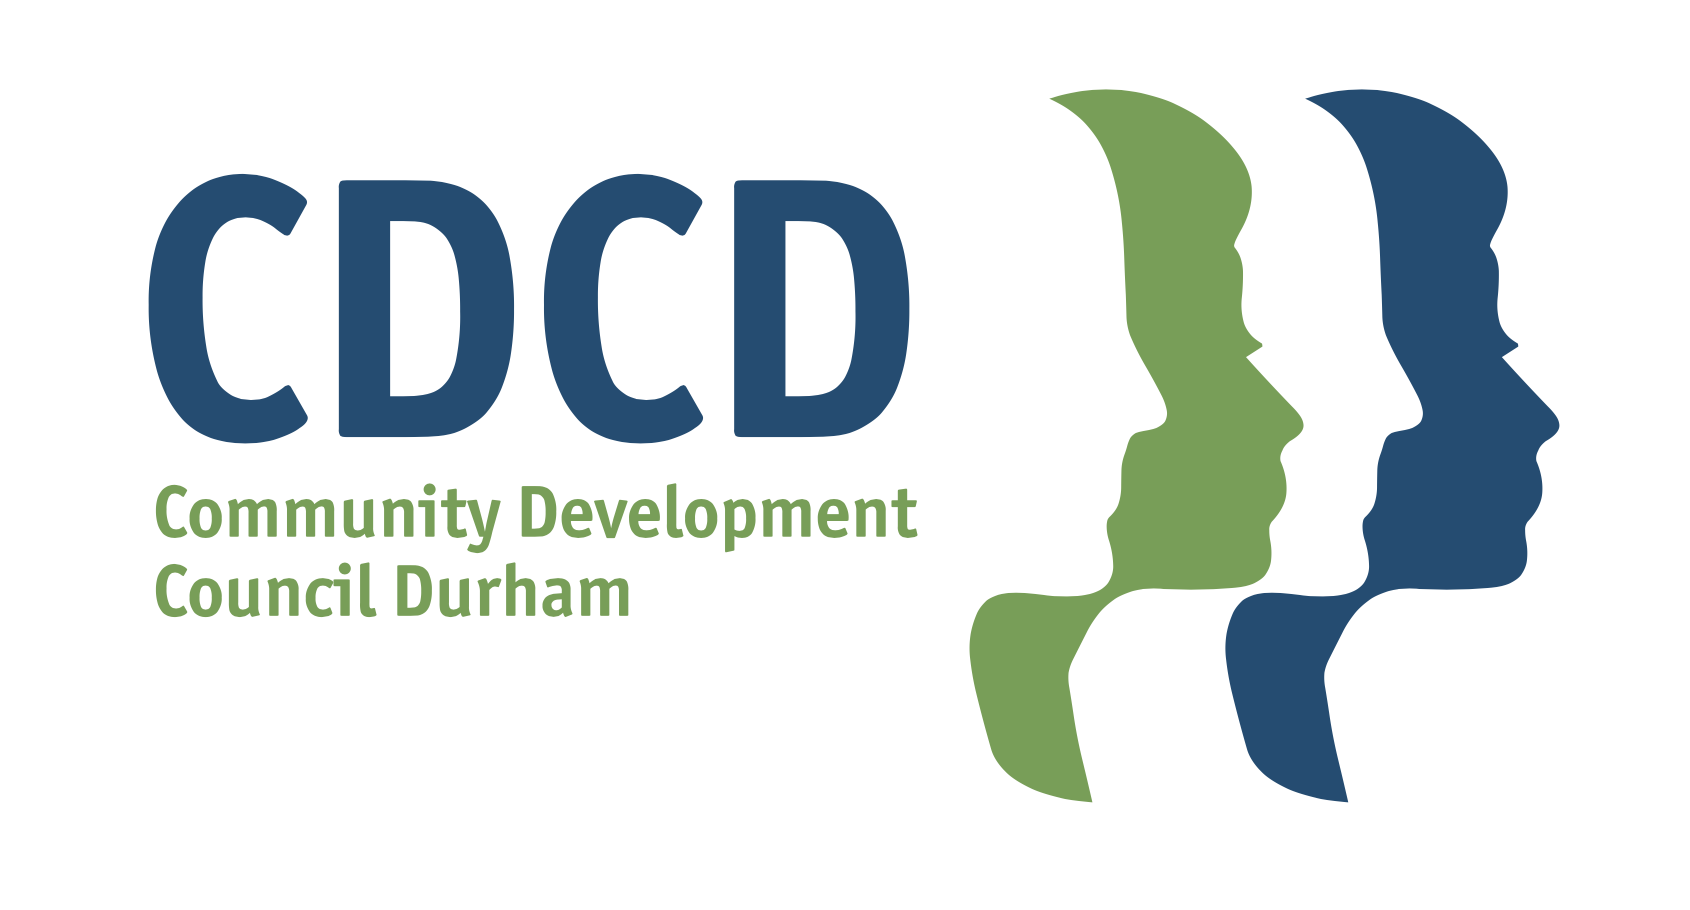 CDCD Community Development Council of Durham